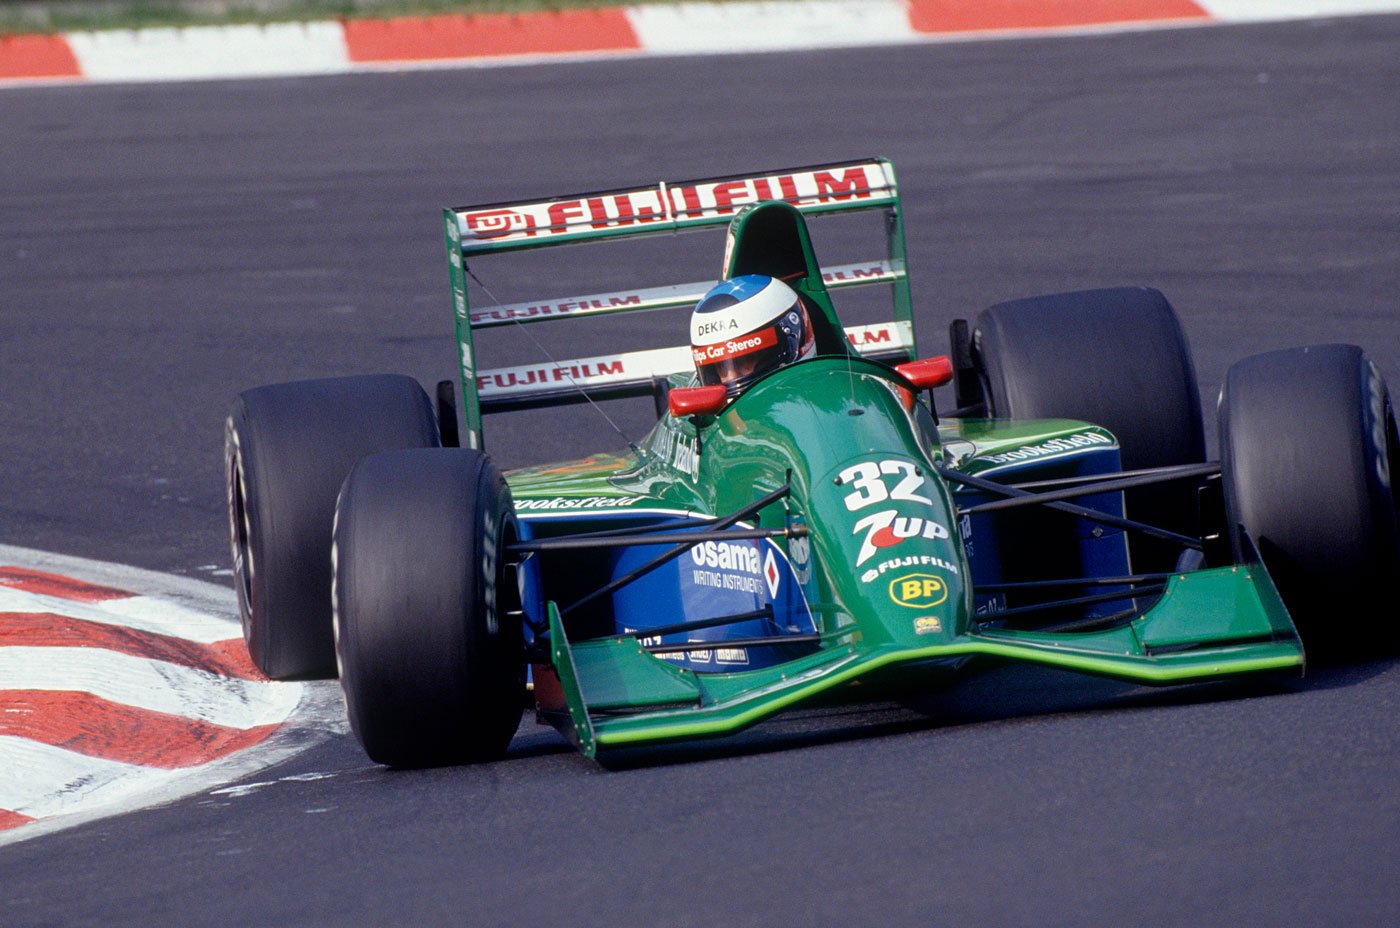 Minichamps 1:18 Schumacher 1991 Belgian GP Jordan diecast model car review